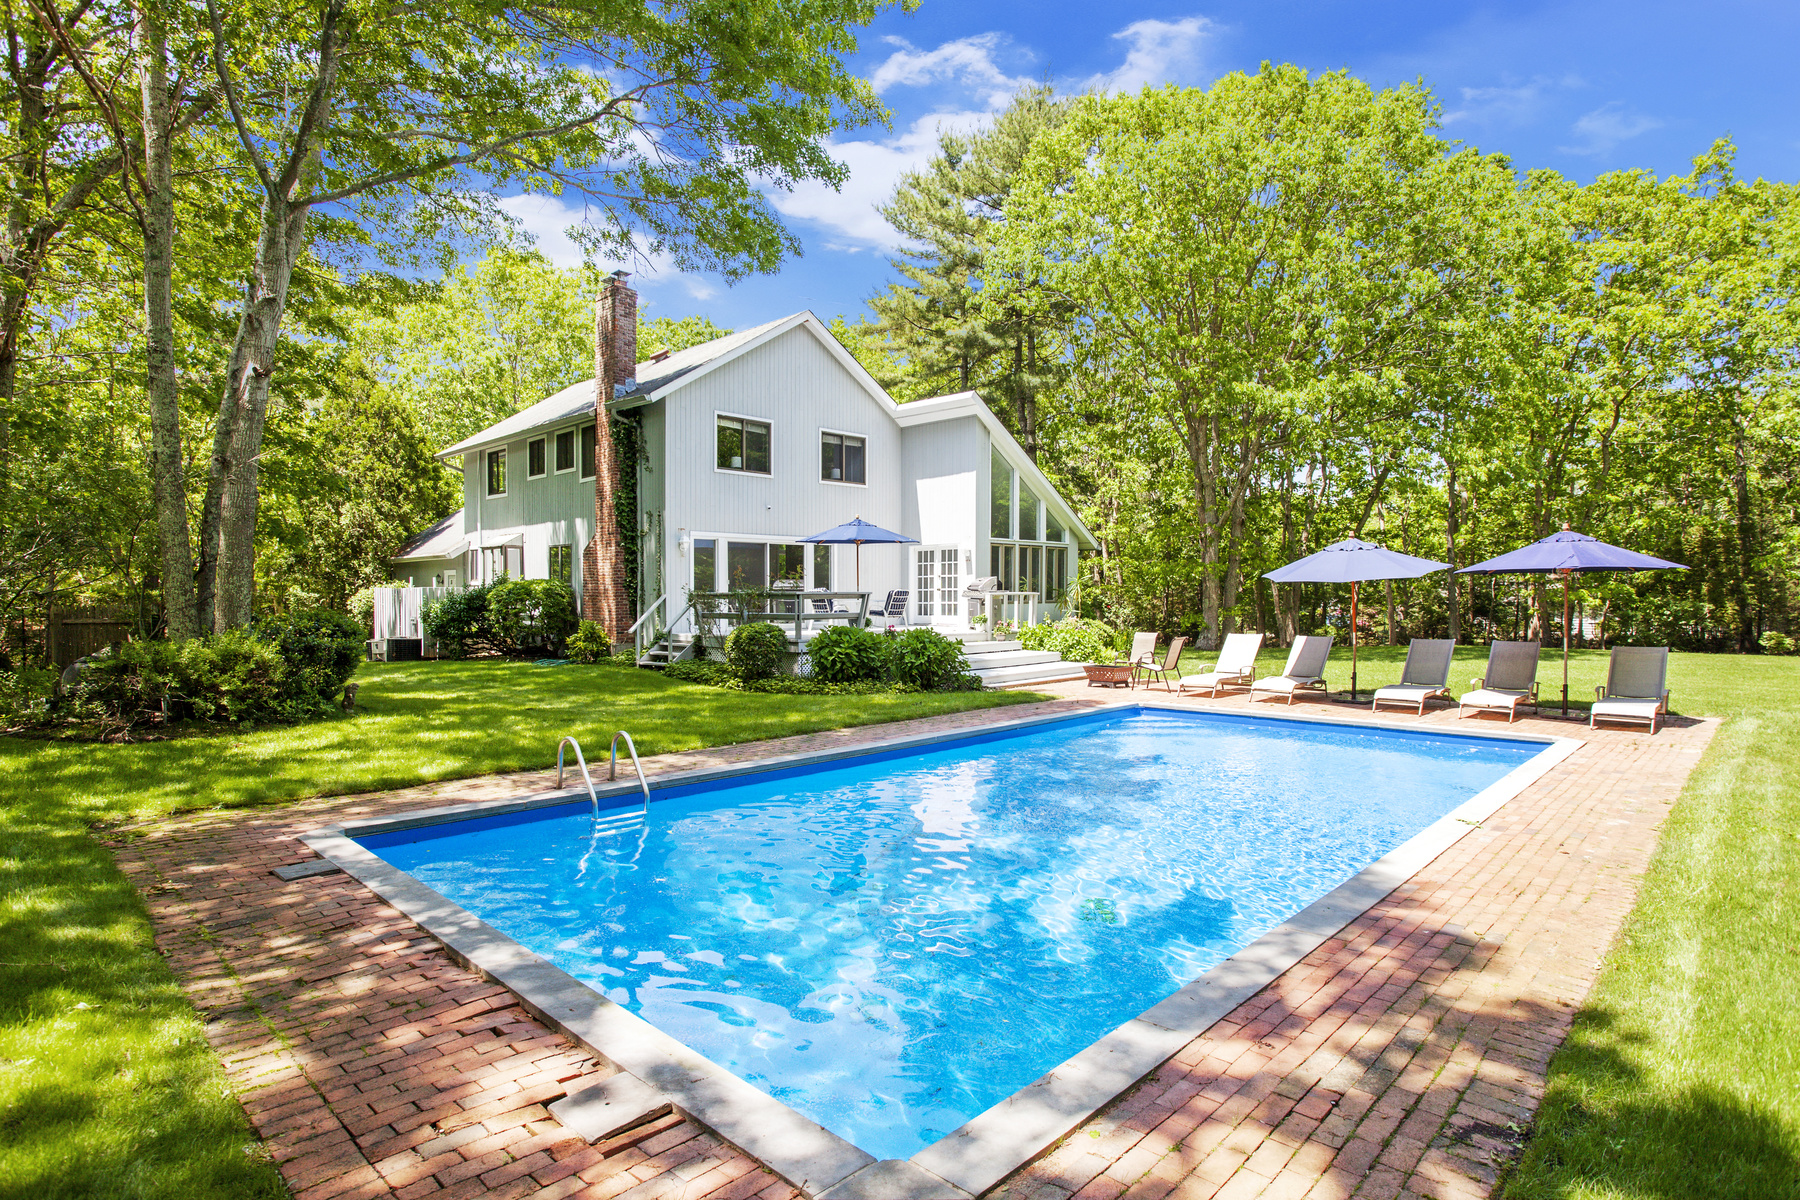 Rental Property at 468 Water Mill Towd Road, Southampton, Hamptons, NY - Bedrooms: 3 
Bathrooms: 2.5  - $27,000 MO.